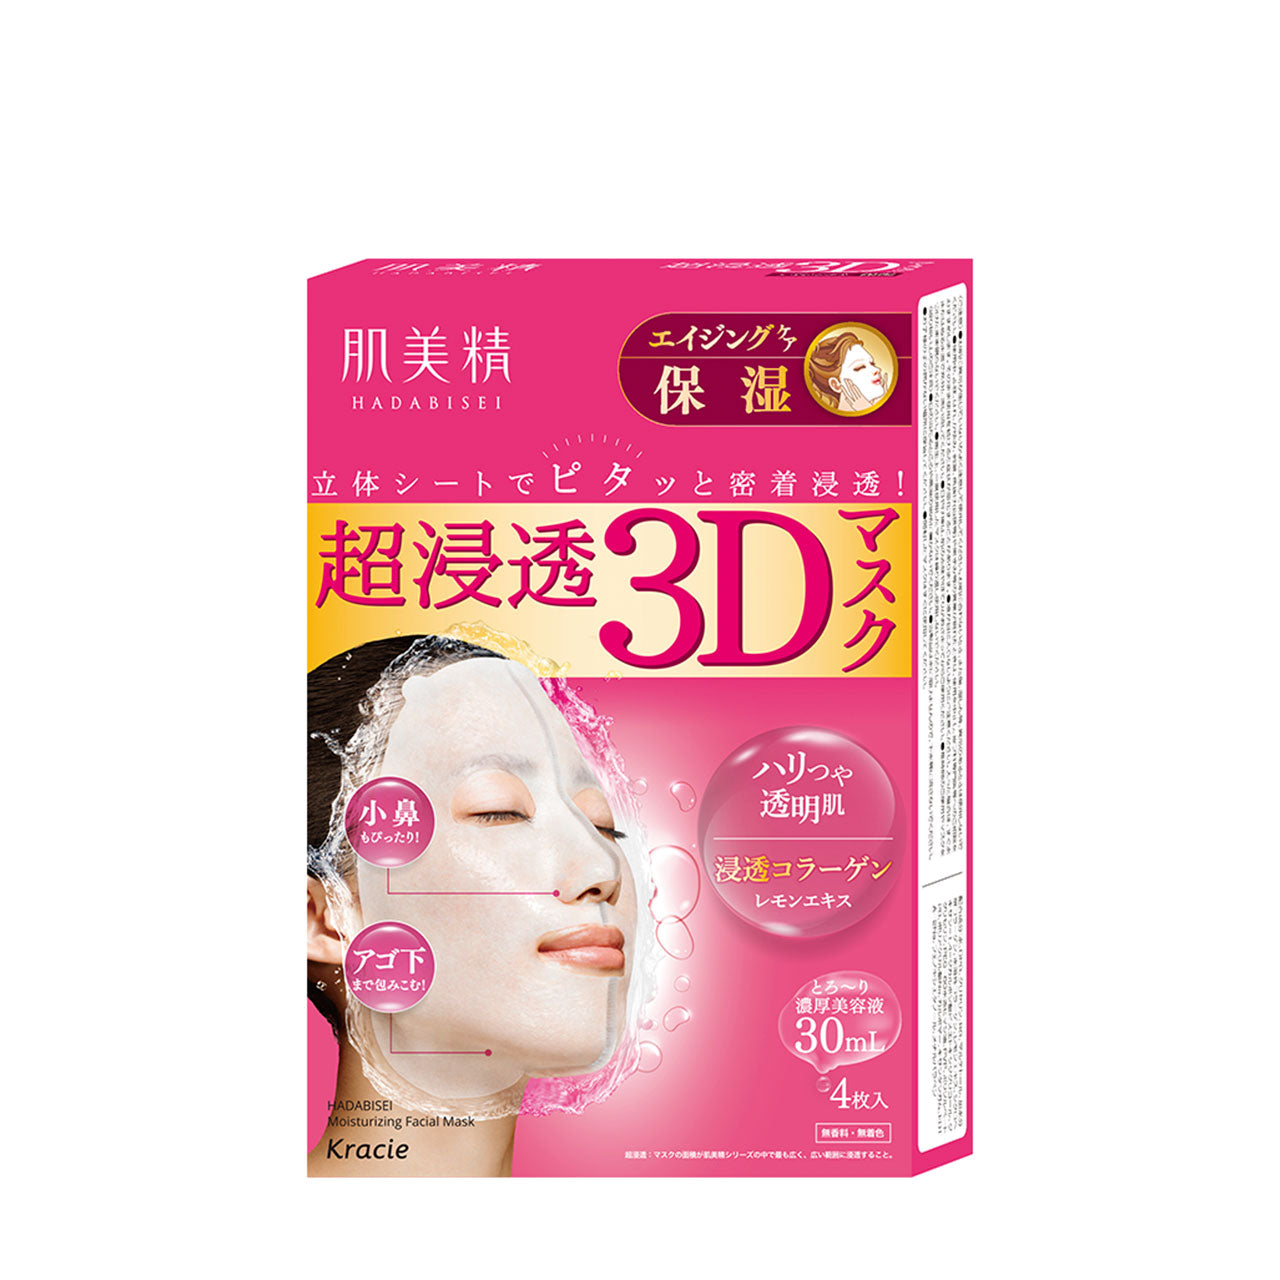 Kracie Hadabisei Advanced Penetrating 3D Face Mask Aging-Care Moisturizing 4piece | Sasa Global eShop